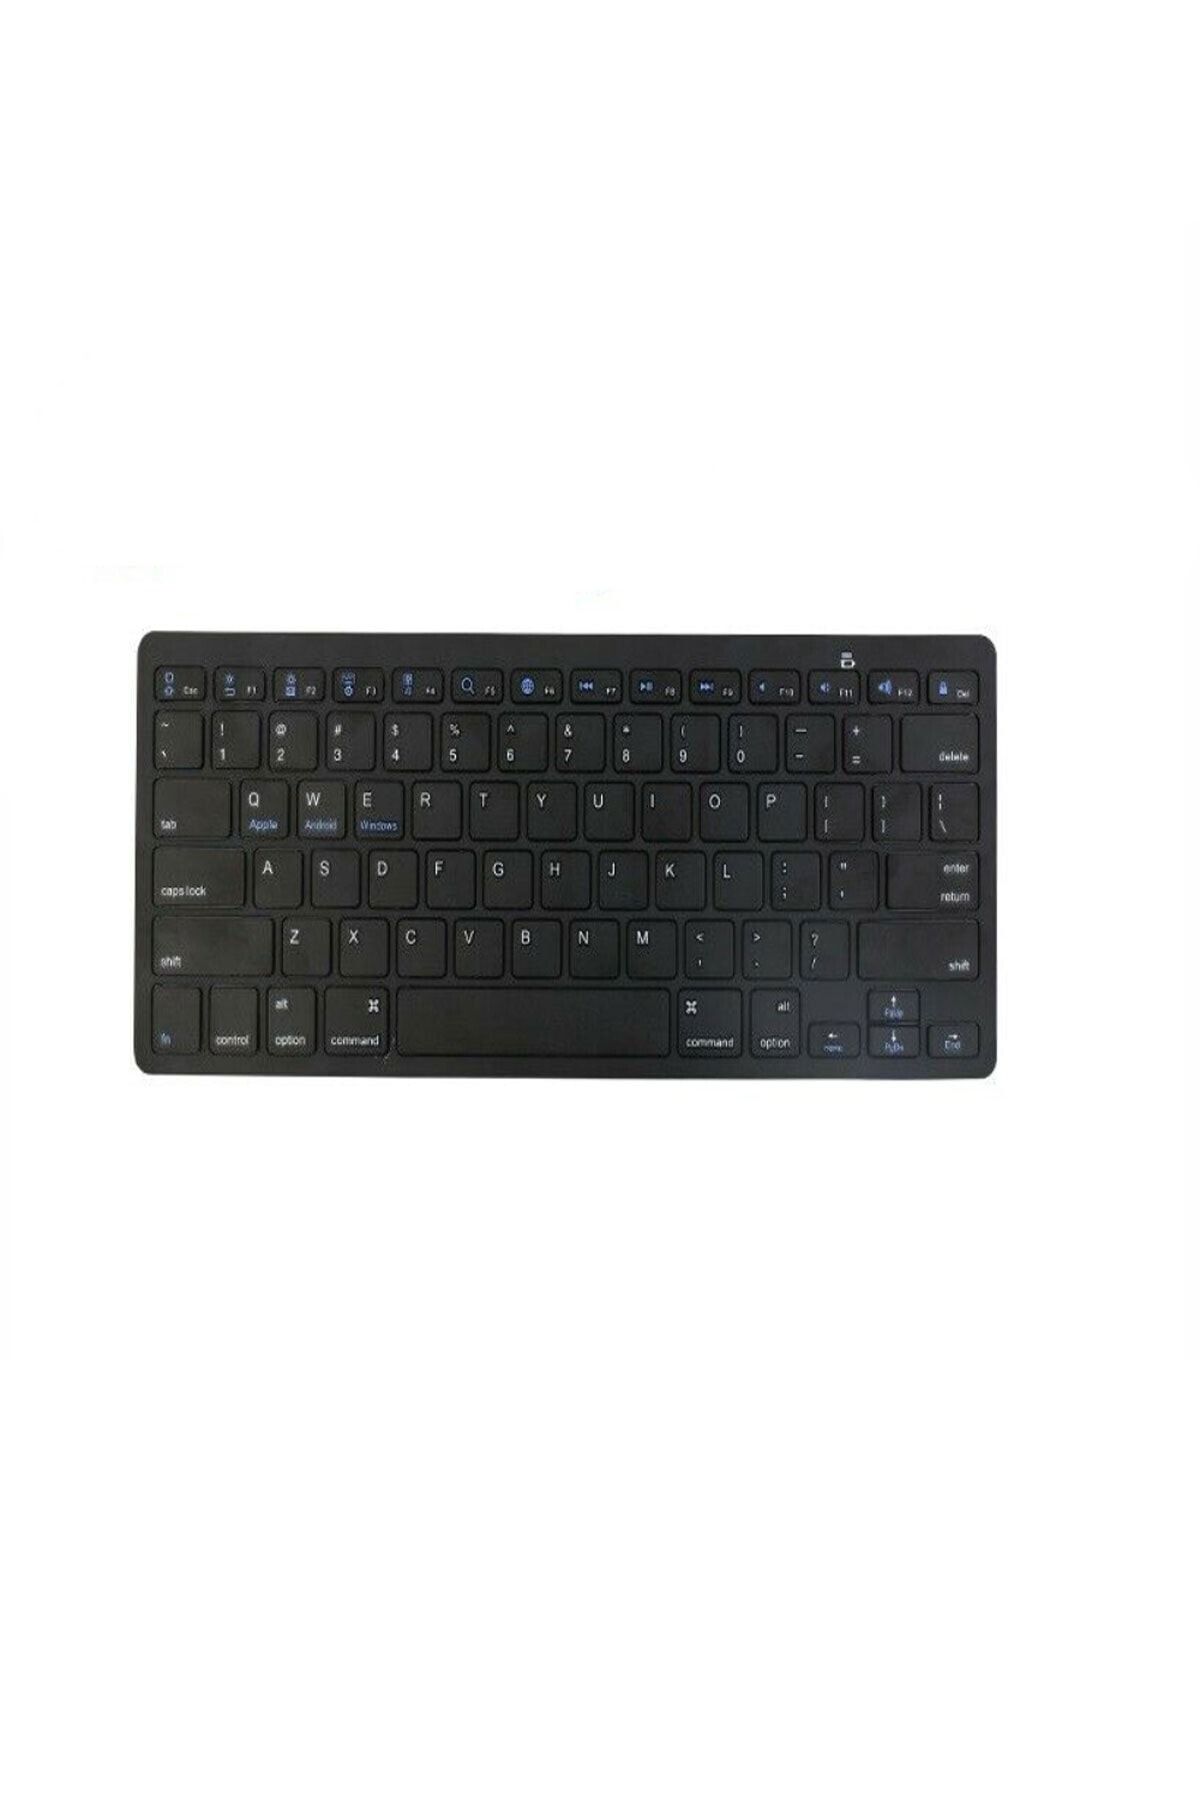 TahTicMer Hometech Mıd 750 Bluetooth Klavye Slim Model Kablosuz Wireless Q Klavye